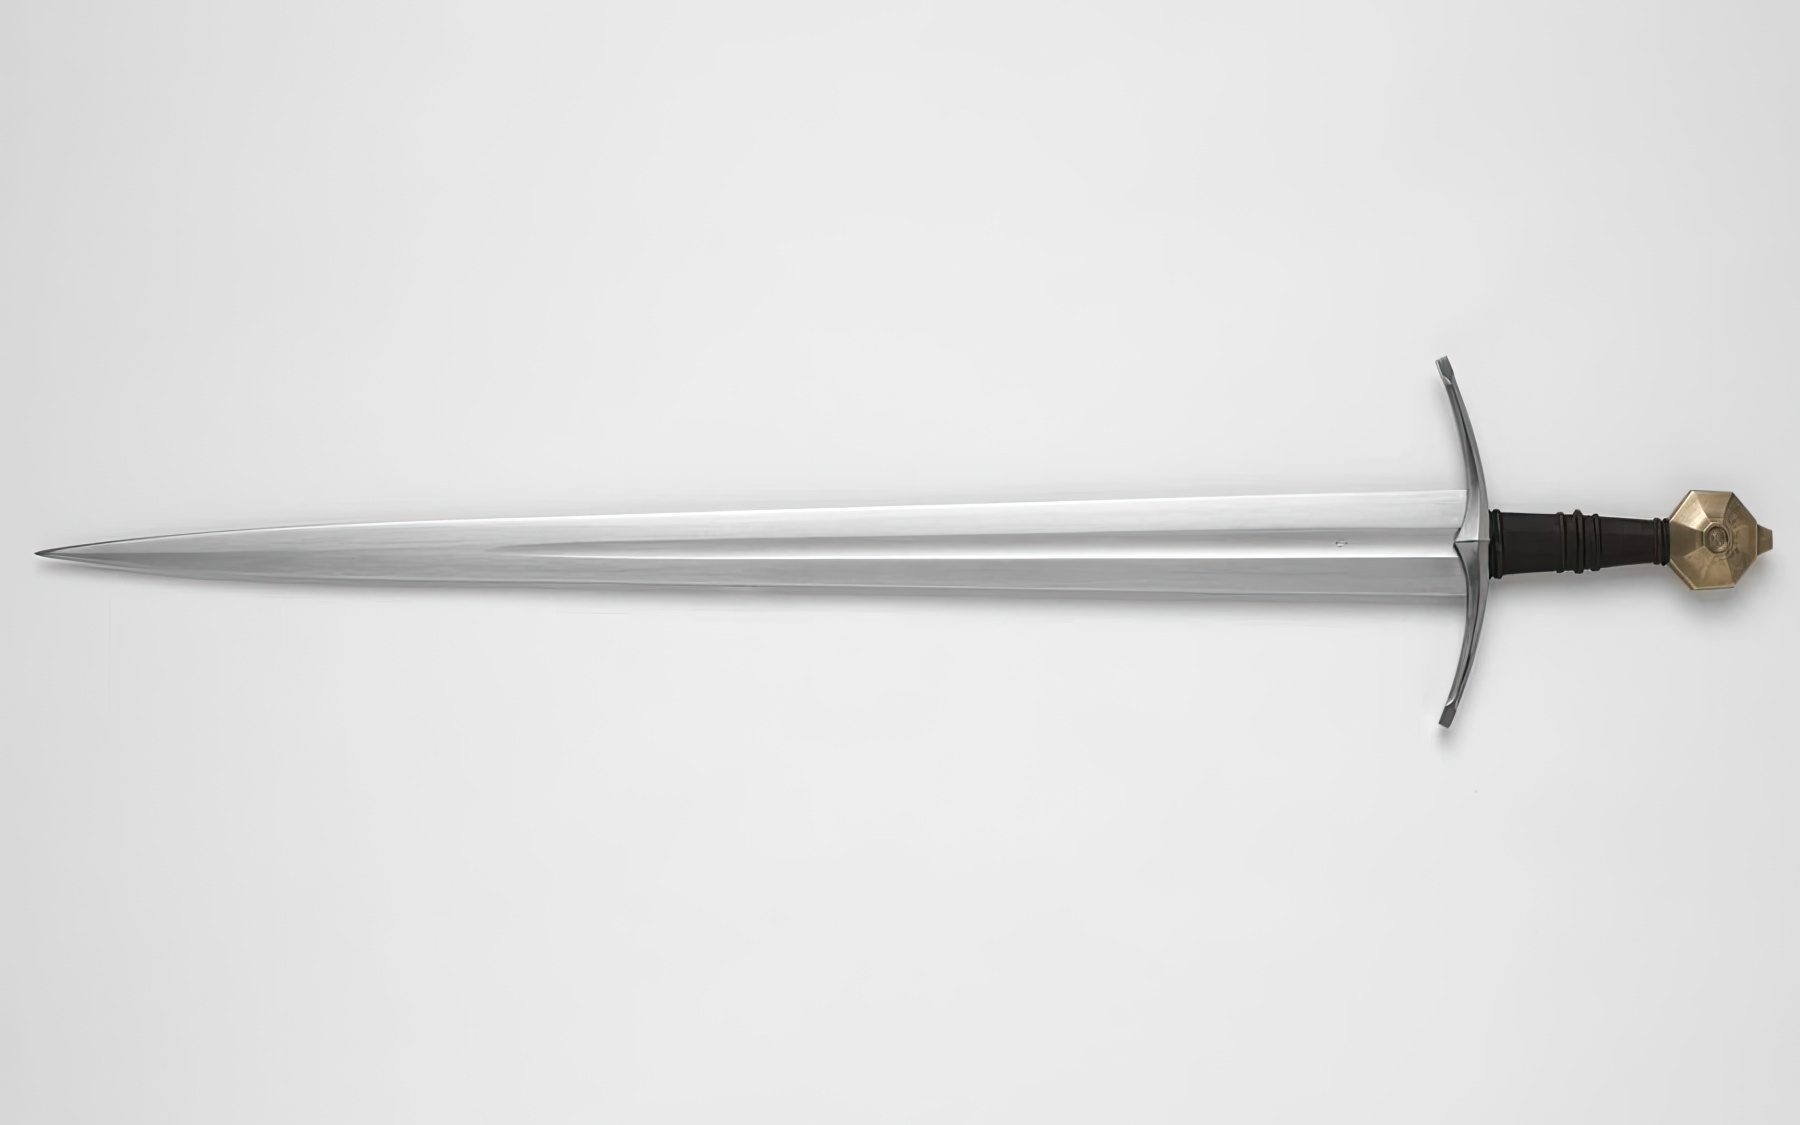 Oakeshott Type XVI Swords: Its Impact & Key Features